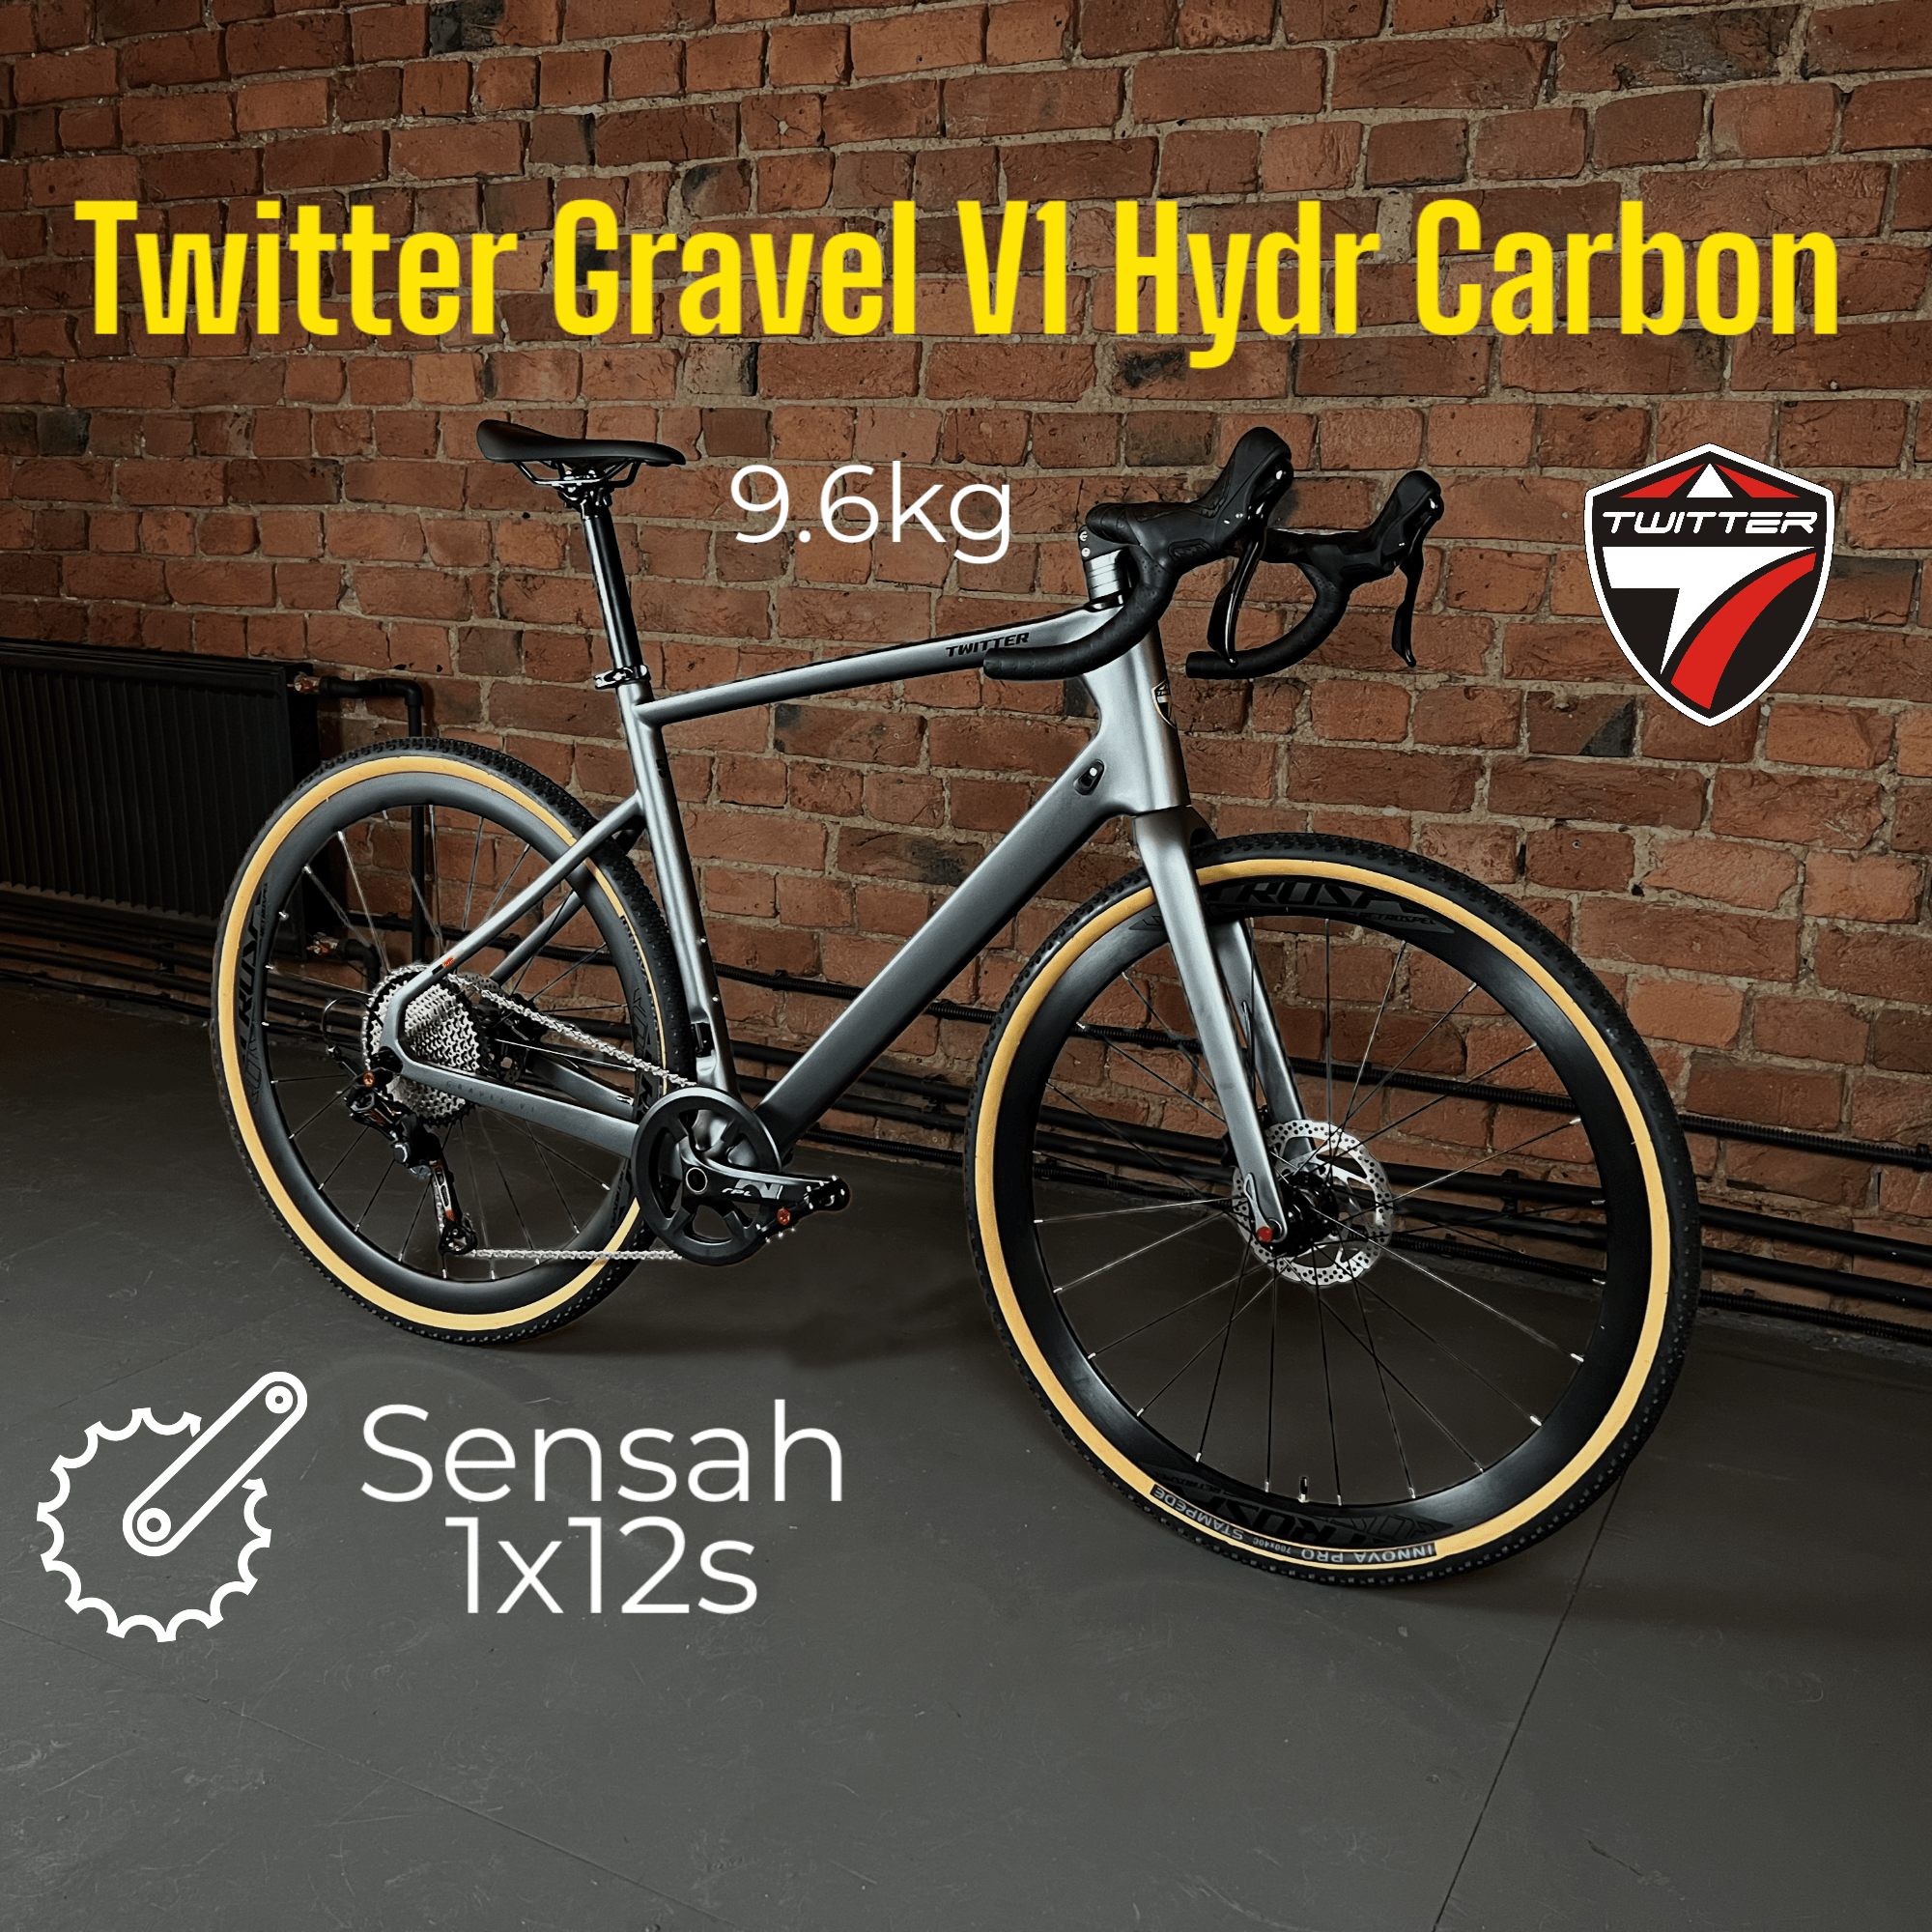 Велосипед Twitter Gravel V1 Full-hydr Carbon, 9.6 кг, 700х40с гревел шоссейный взрослый, 54 см 12 скоростей, цвет серый